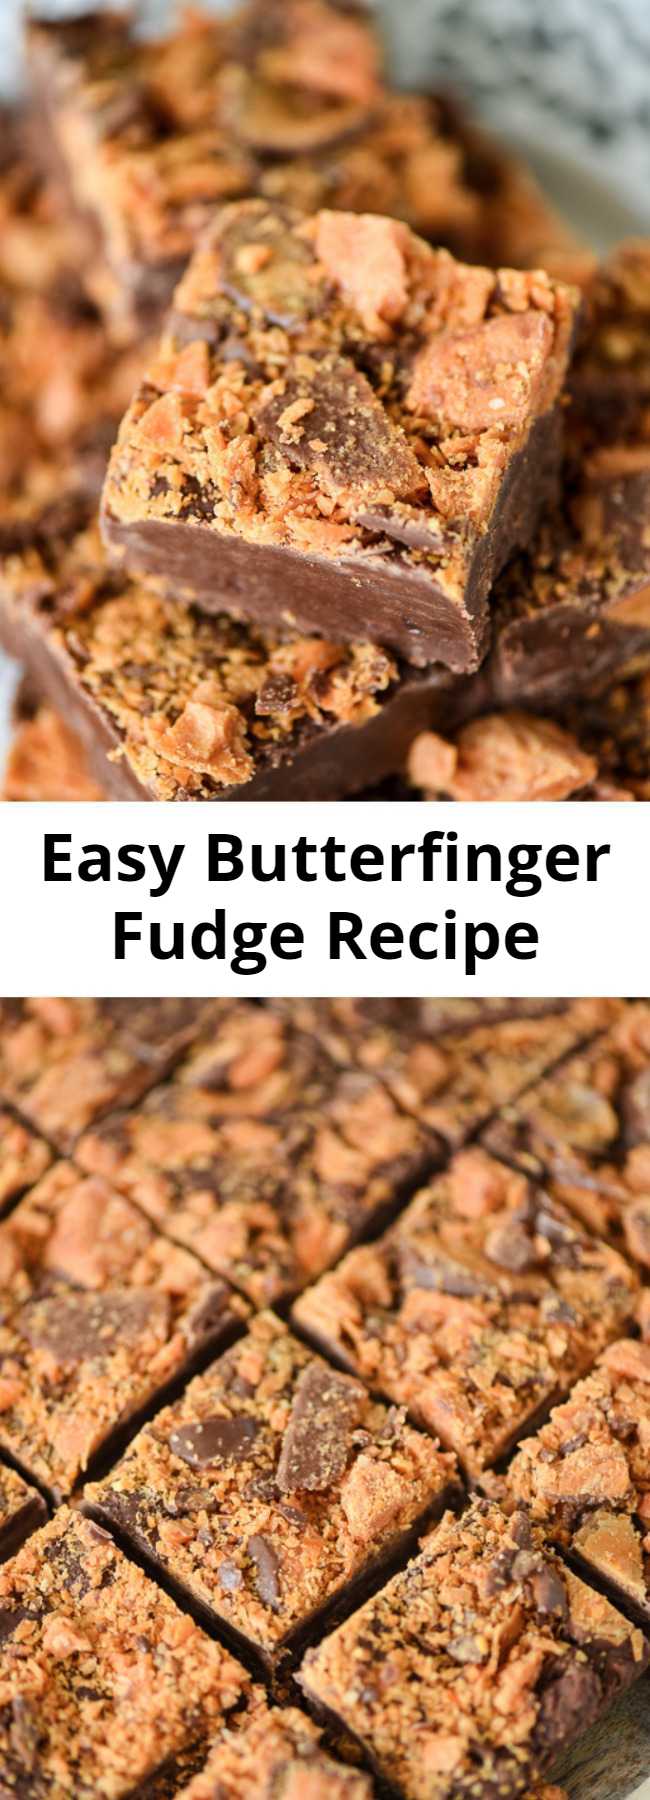 Easy Butterfinger Fudge Recipe - Easy chocolate fudge recipe topped with Butterfinger candy.